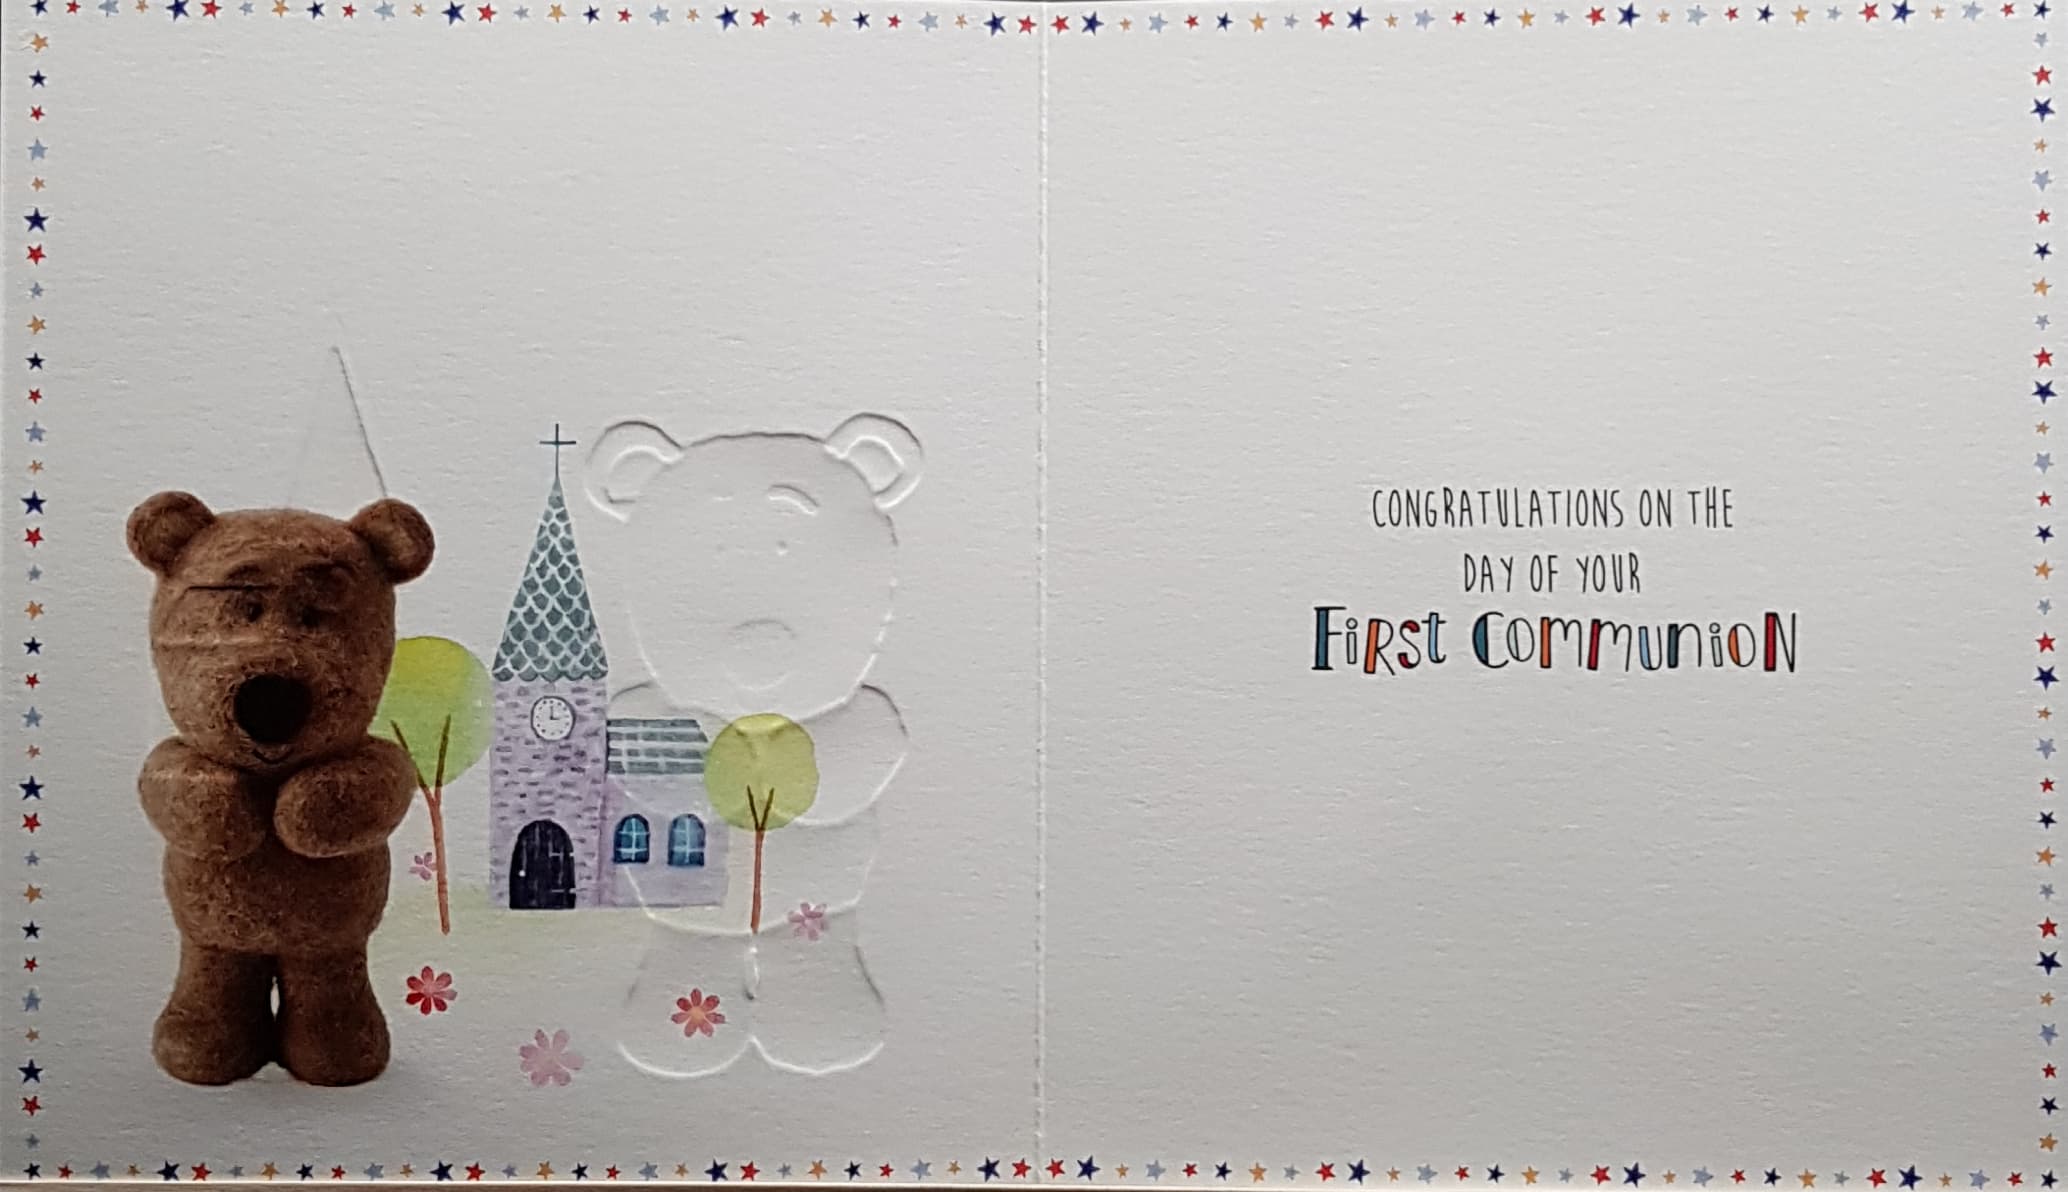 Communion Card - Gender Neutral - On Your First Communion & Teddy Bear Beside Church